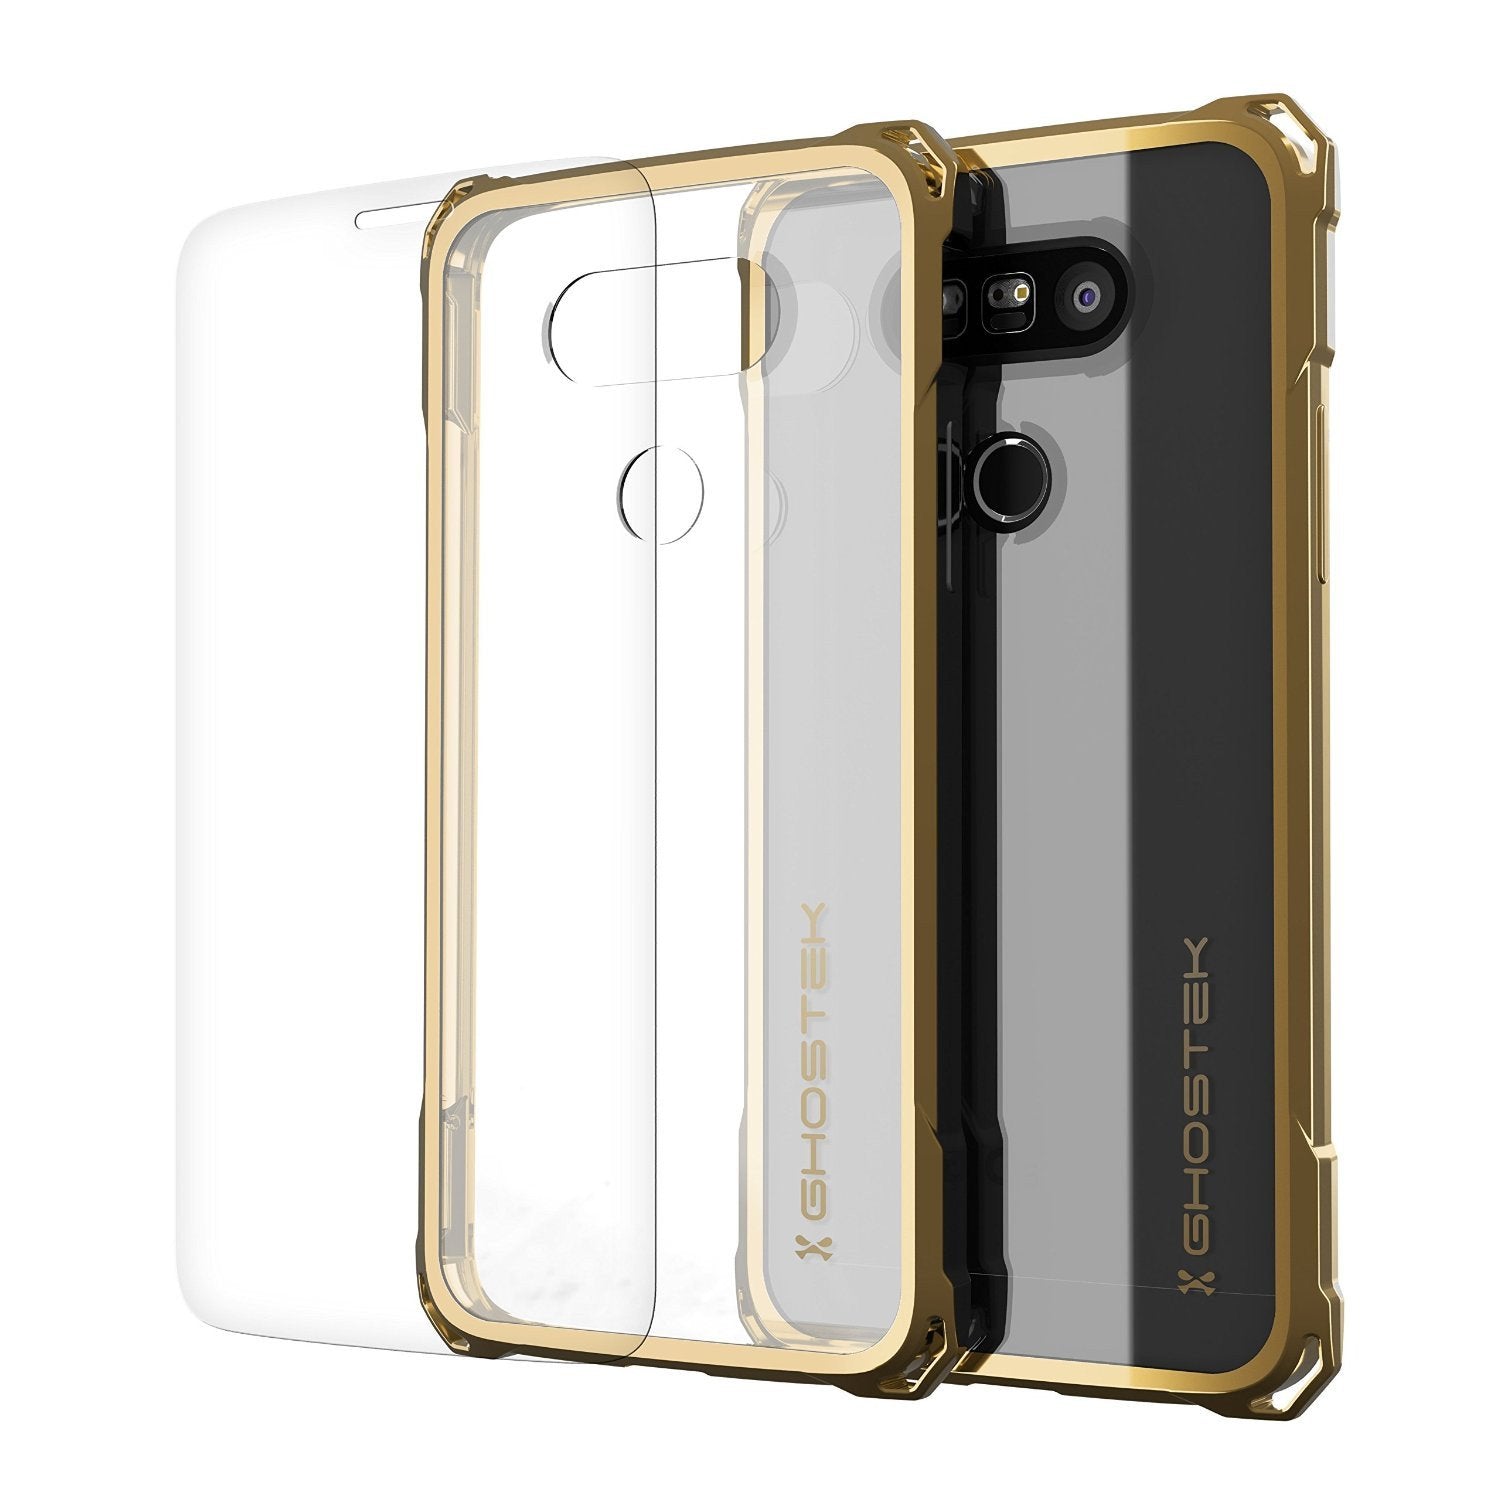 LG G5 Case, Ghostek® Gold Covert Premium Slim Hybrid Protective Cover | Lifetime Warranty Exchange